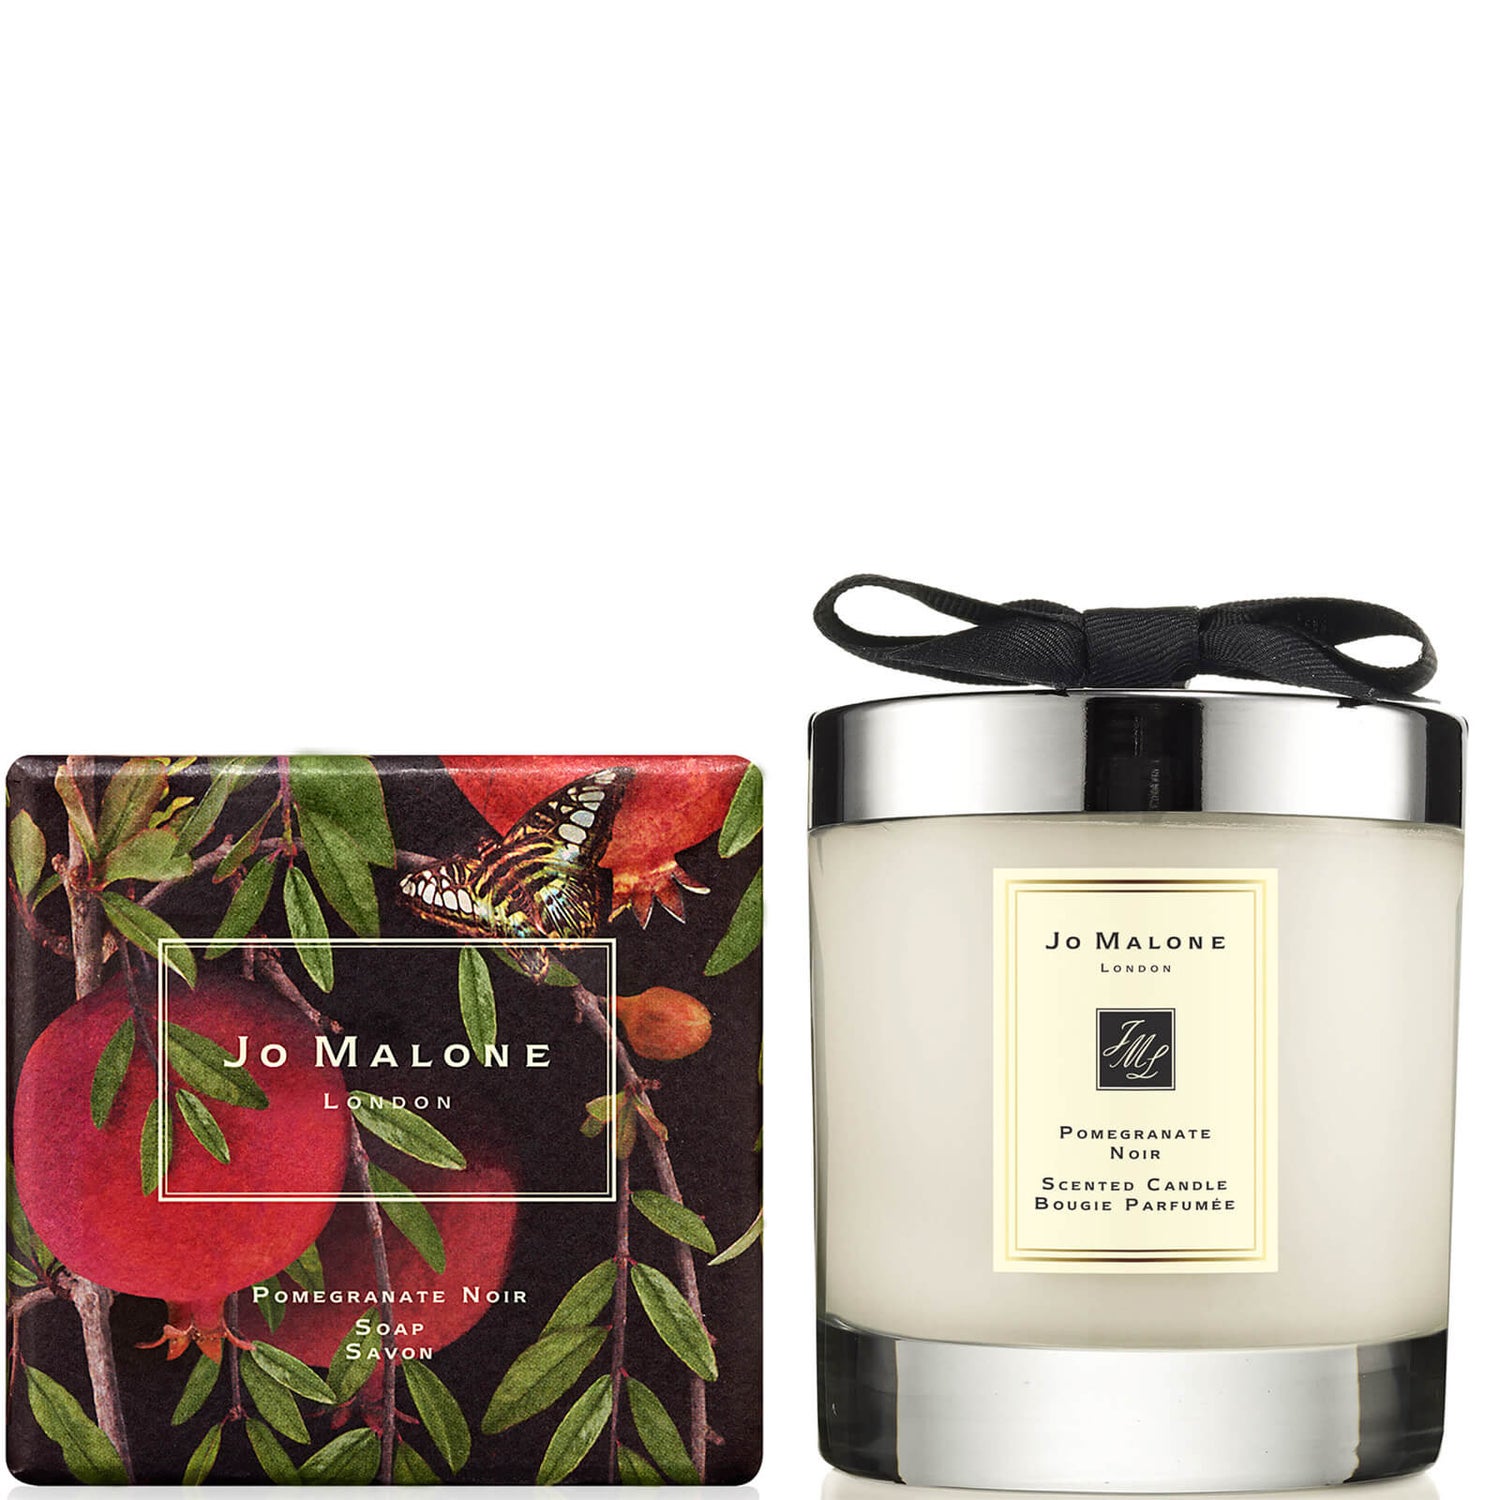 Jo Malone London Pomegranate Noir Soap and Candle Bundle